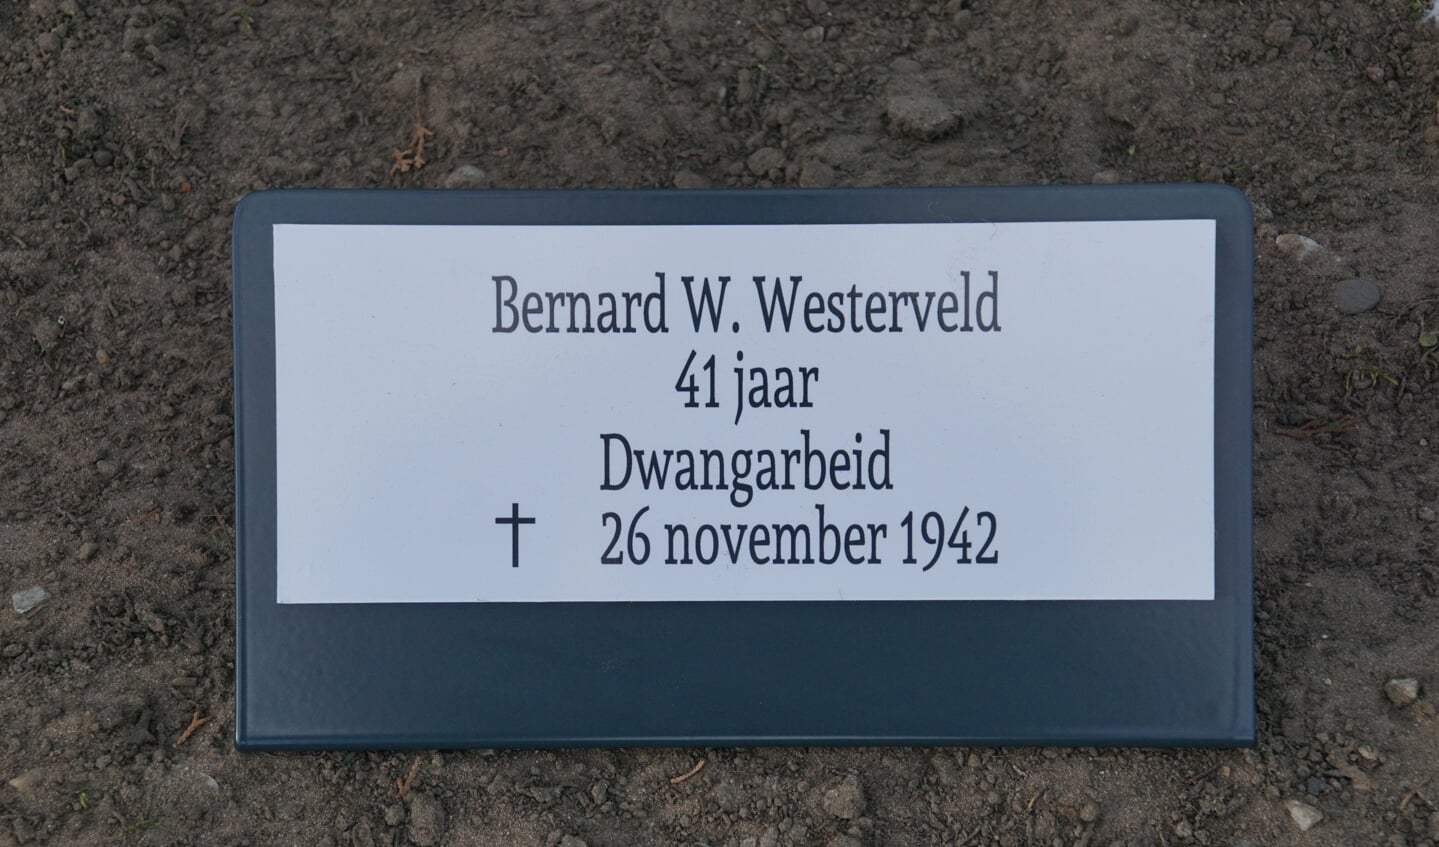 Bernard W. Westerveld, 41, dwangarbeid